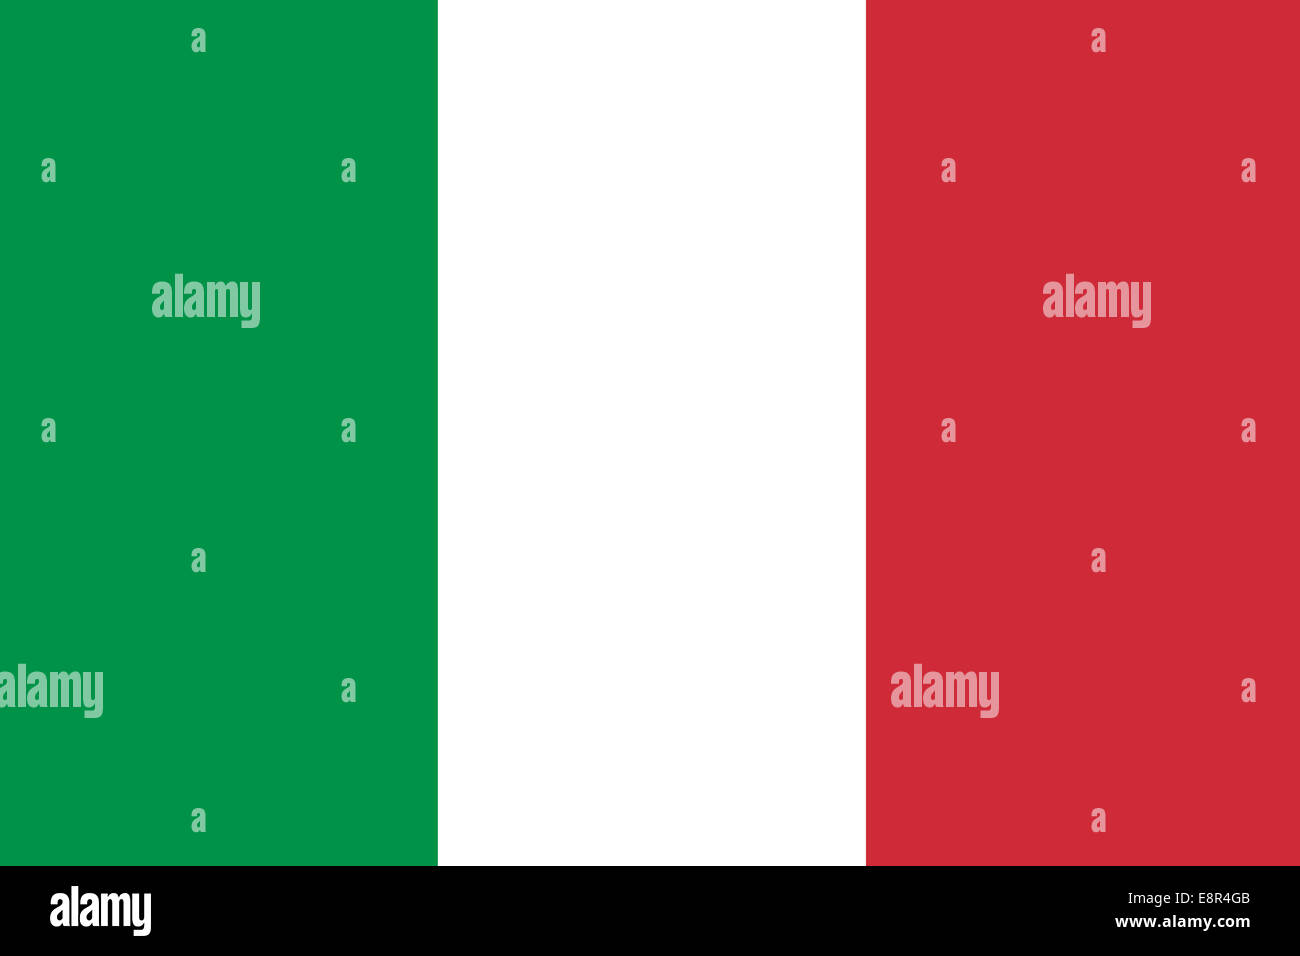 Flag of Italy - Italian flag standard ratio - true RGB color mode Stock Photo